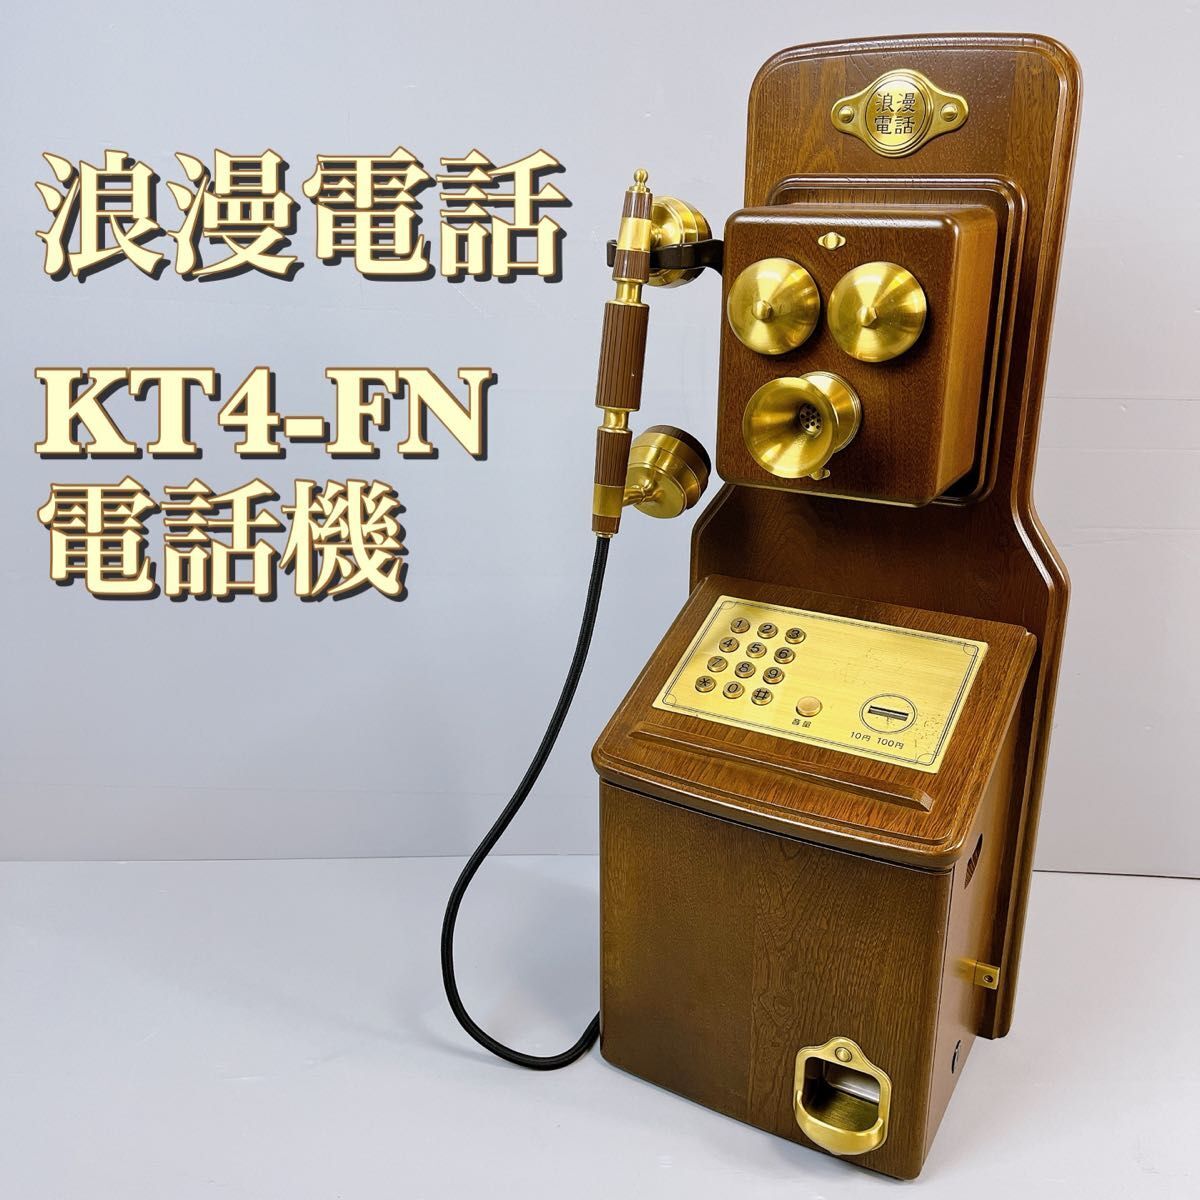  Showa Retro .. telephone KT4-FN public telephone antique Japan communication equipment interior Classic telephone machine 